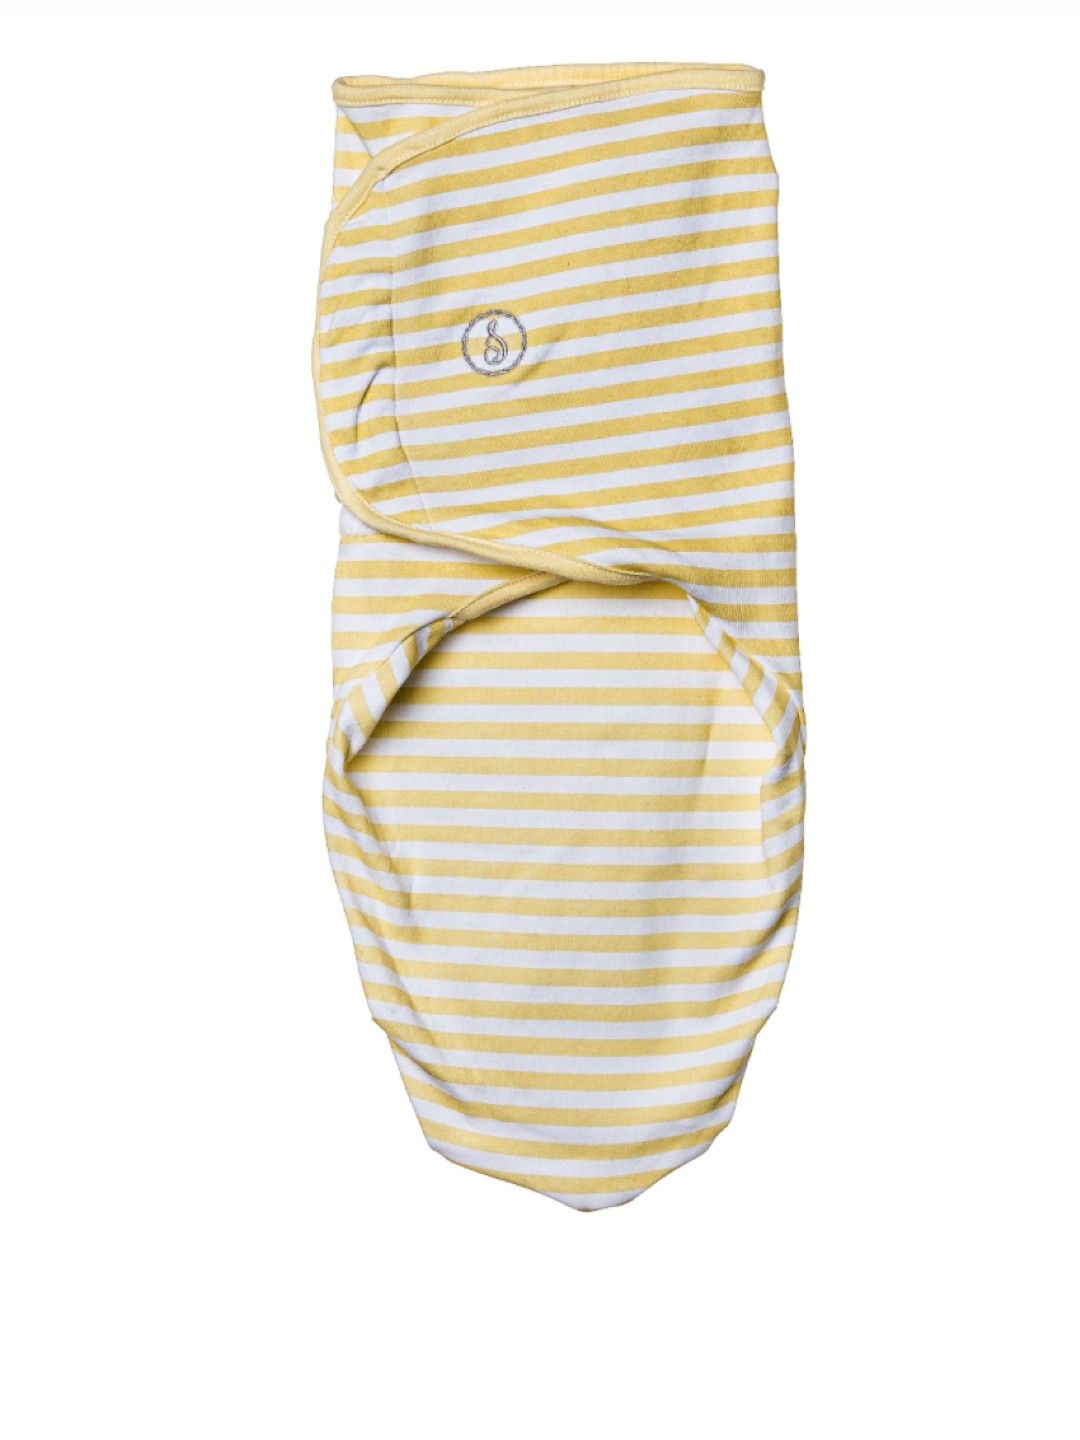 Swaddies PH Yellow Stripes Velcro Swaddle Wrap